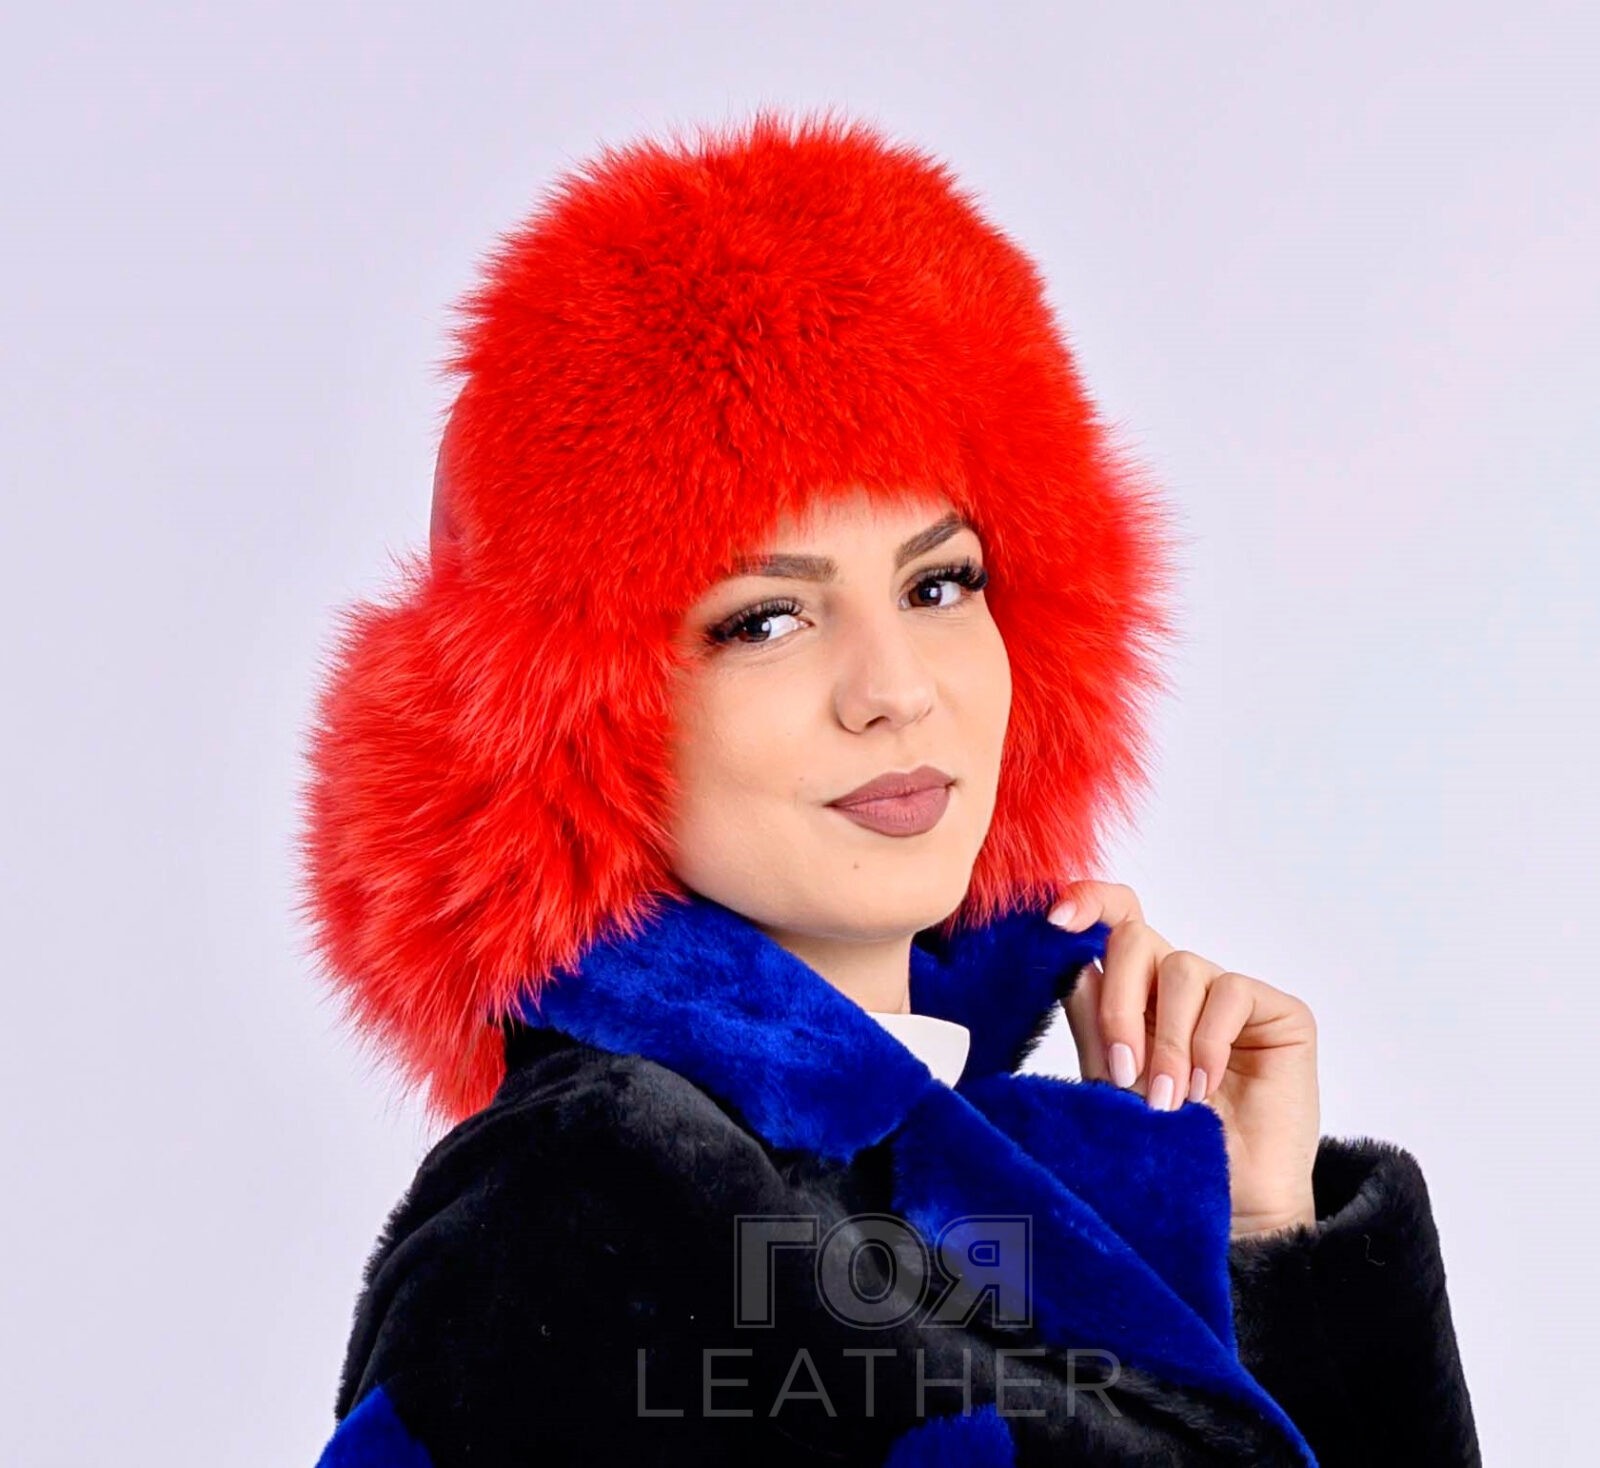 Дамска шапка от лисица. Нов модел дамска шапка от ГОЯ Leather. 100% естествена кожа.